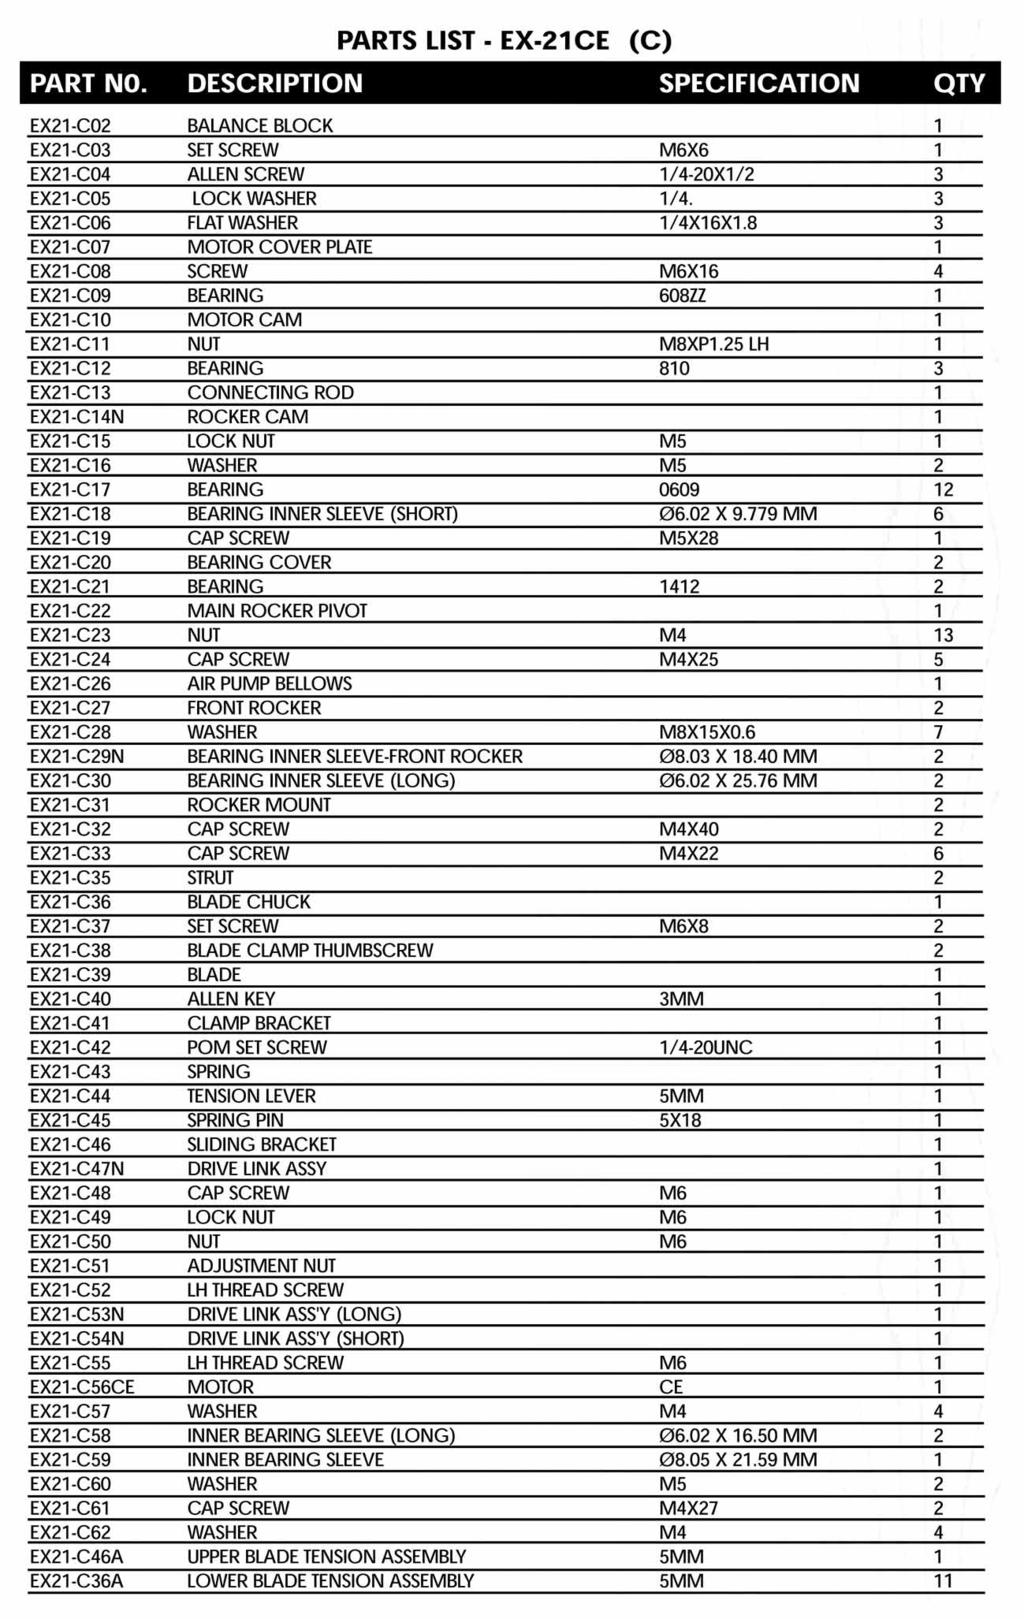 EX-21 Prts List (C).